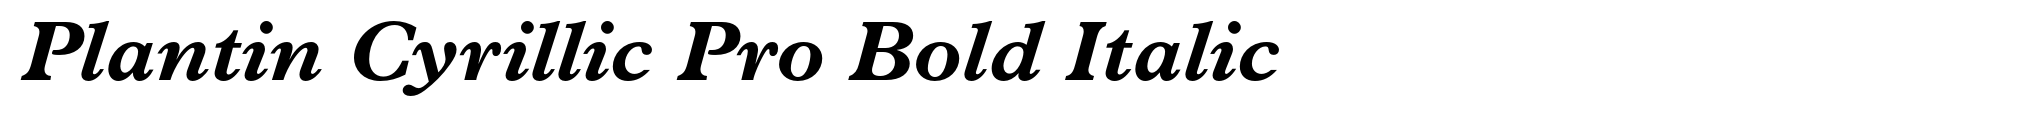 Plantin Cyrillic Pro Bold Italic image